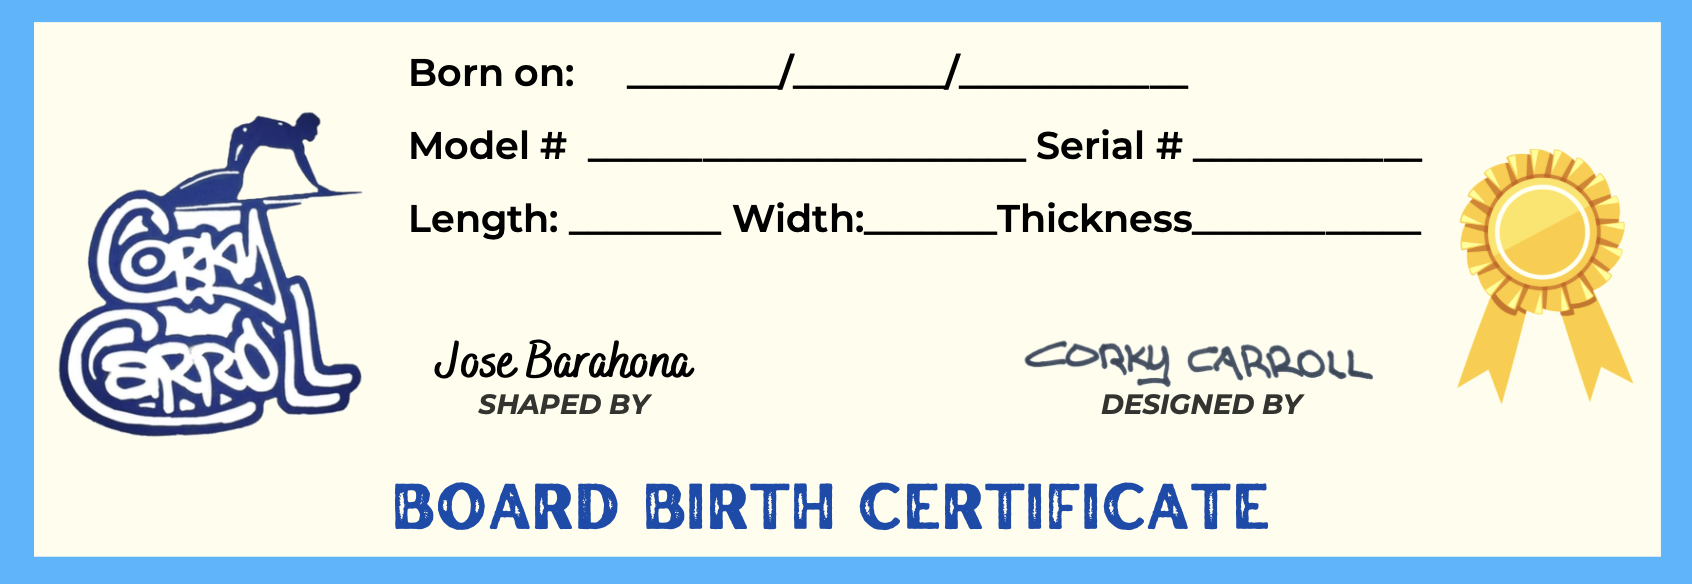 Corky Carroll Board Birth certificate photo